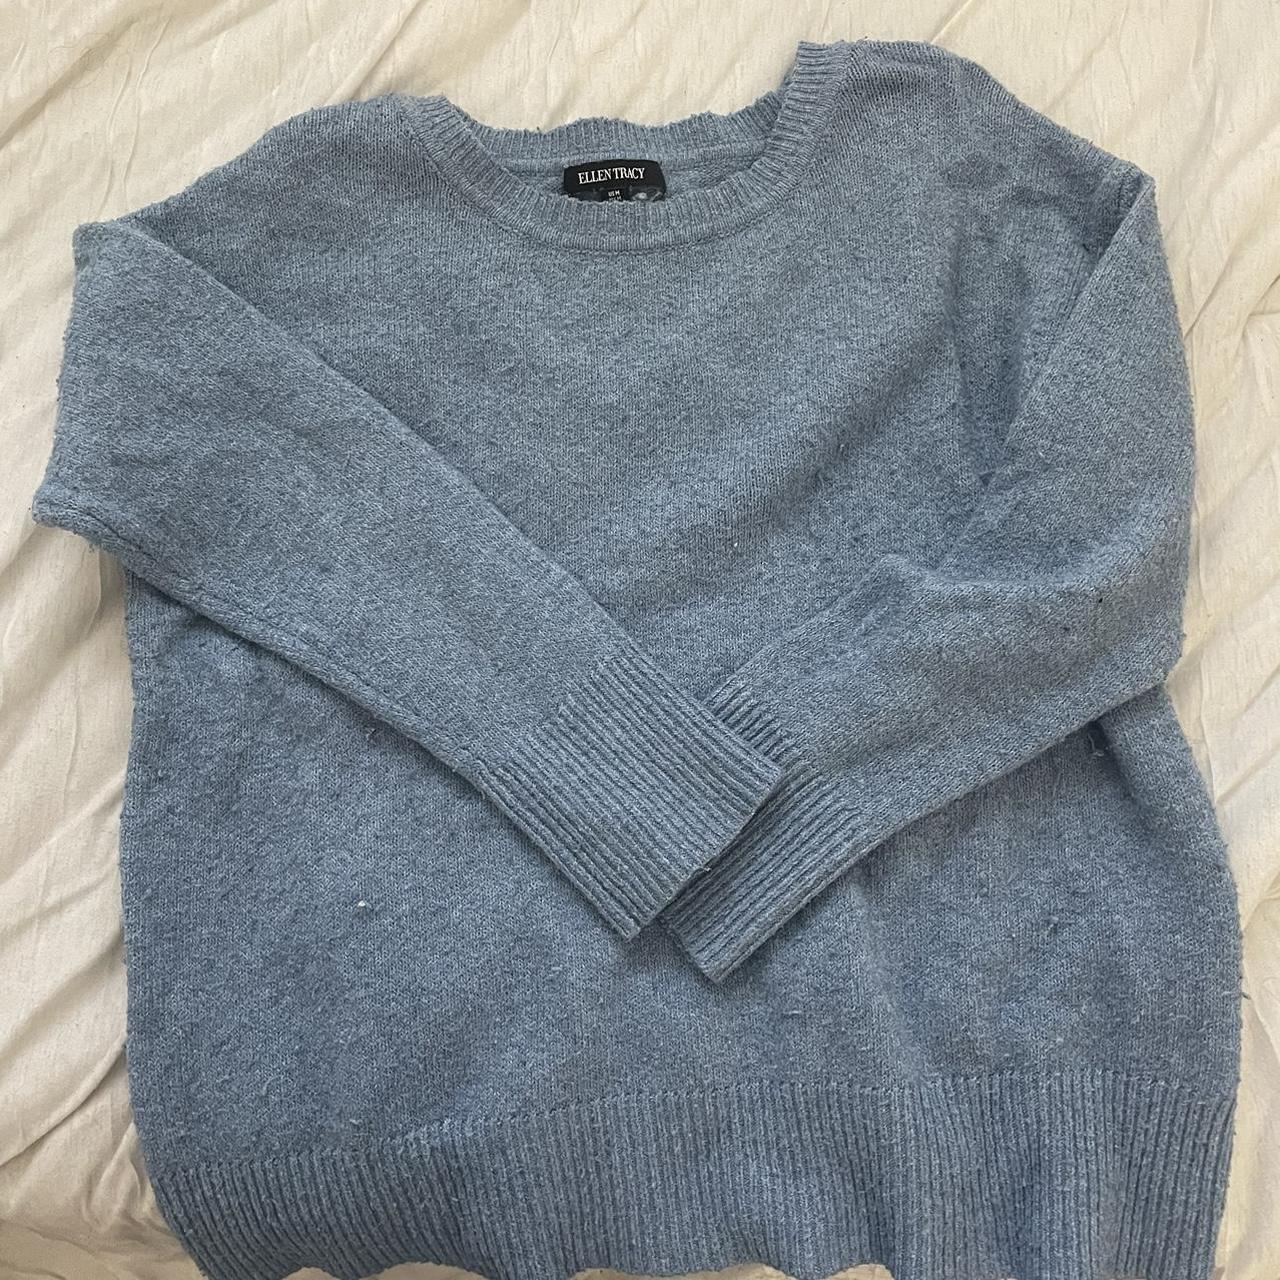 Blue sweater - Depop